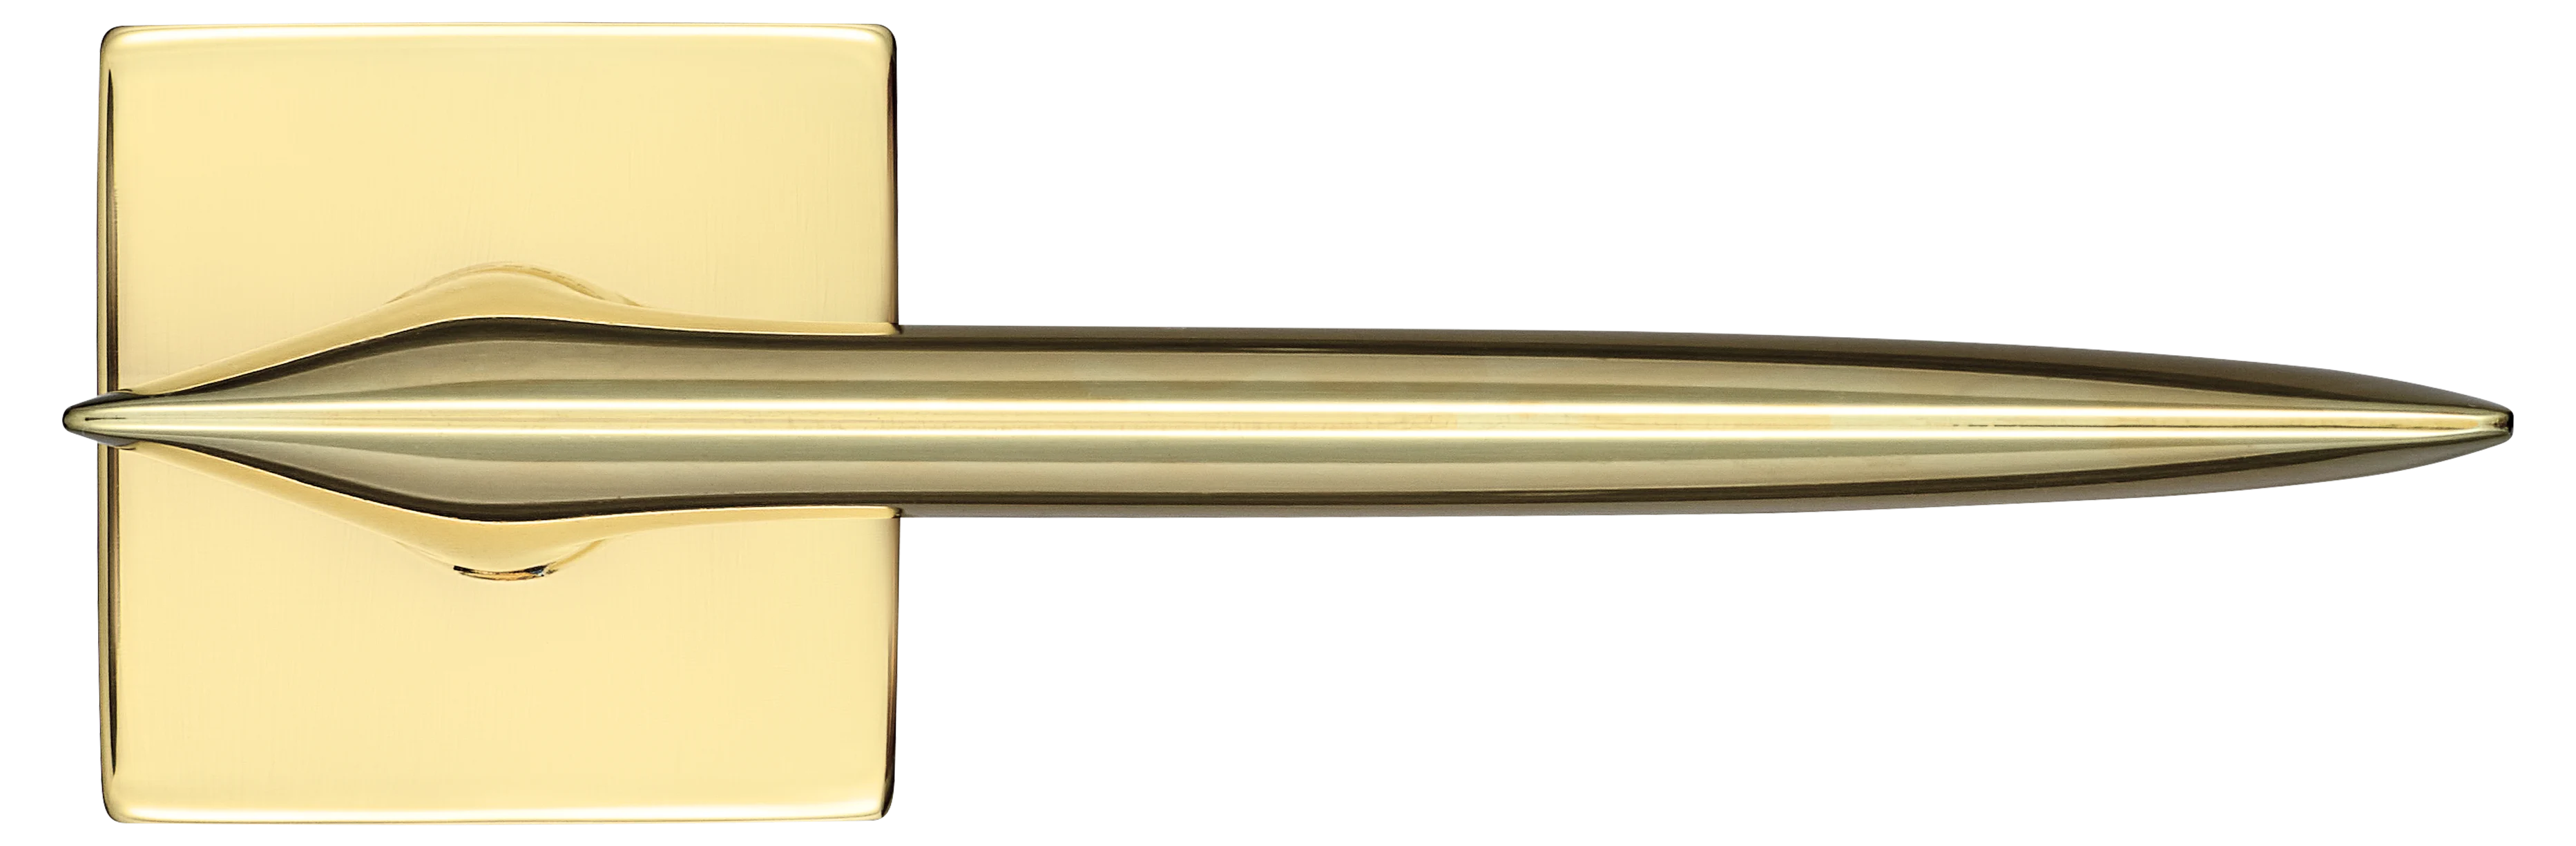 GALACTIC S5 OTL, ручка дверная, цвет -  золото фото купить в Южно-Сахалинске